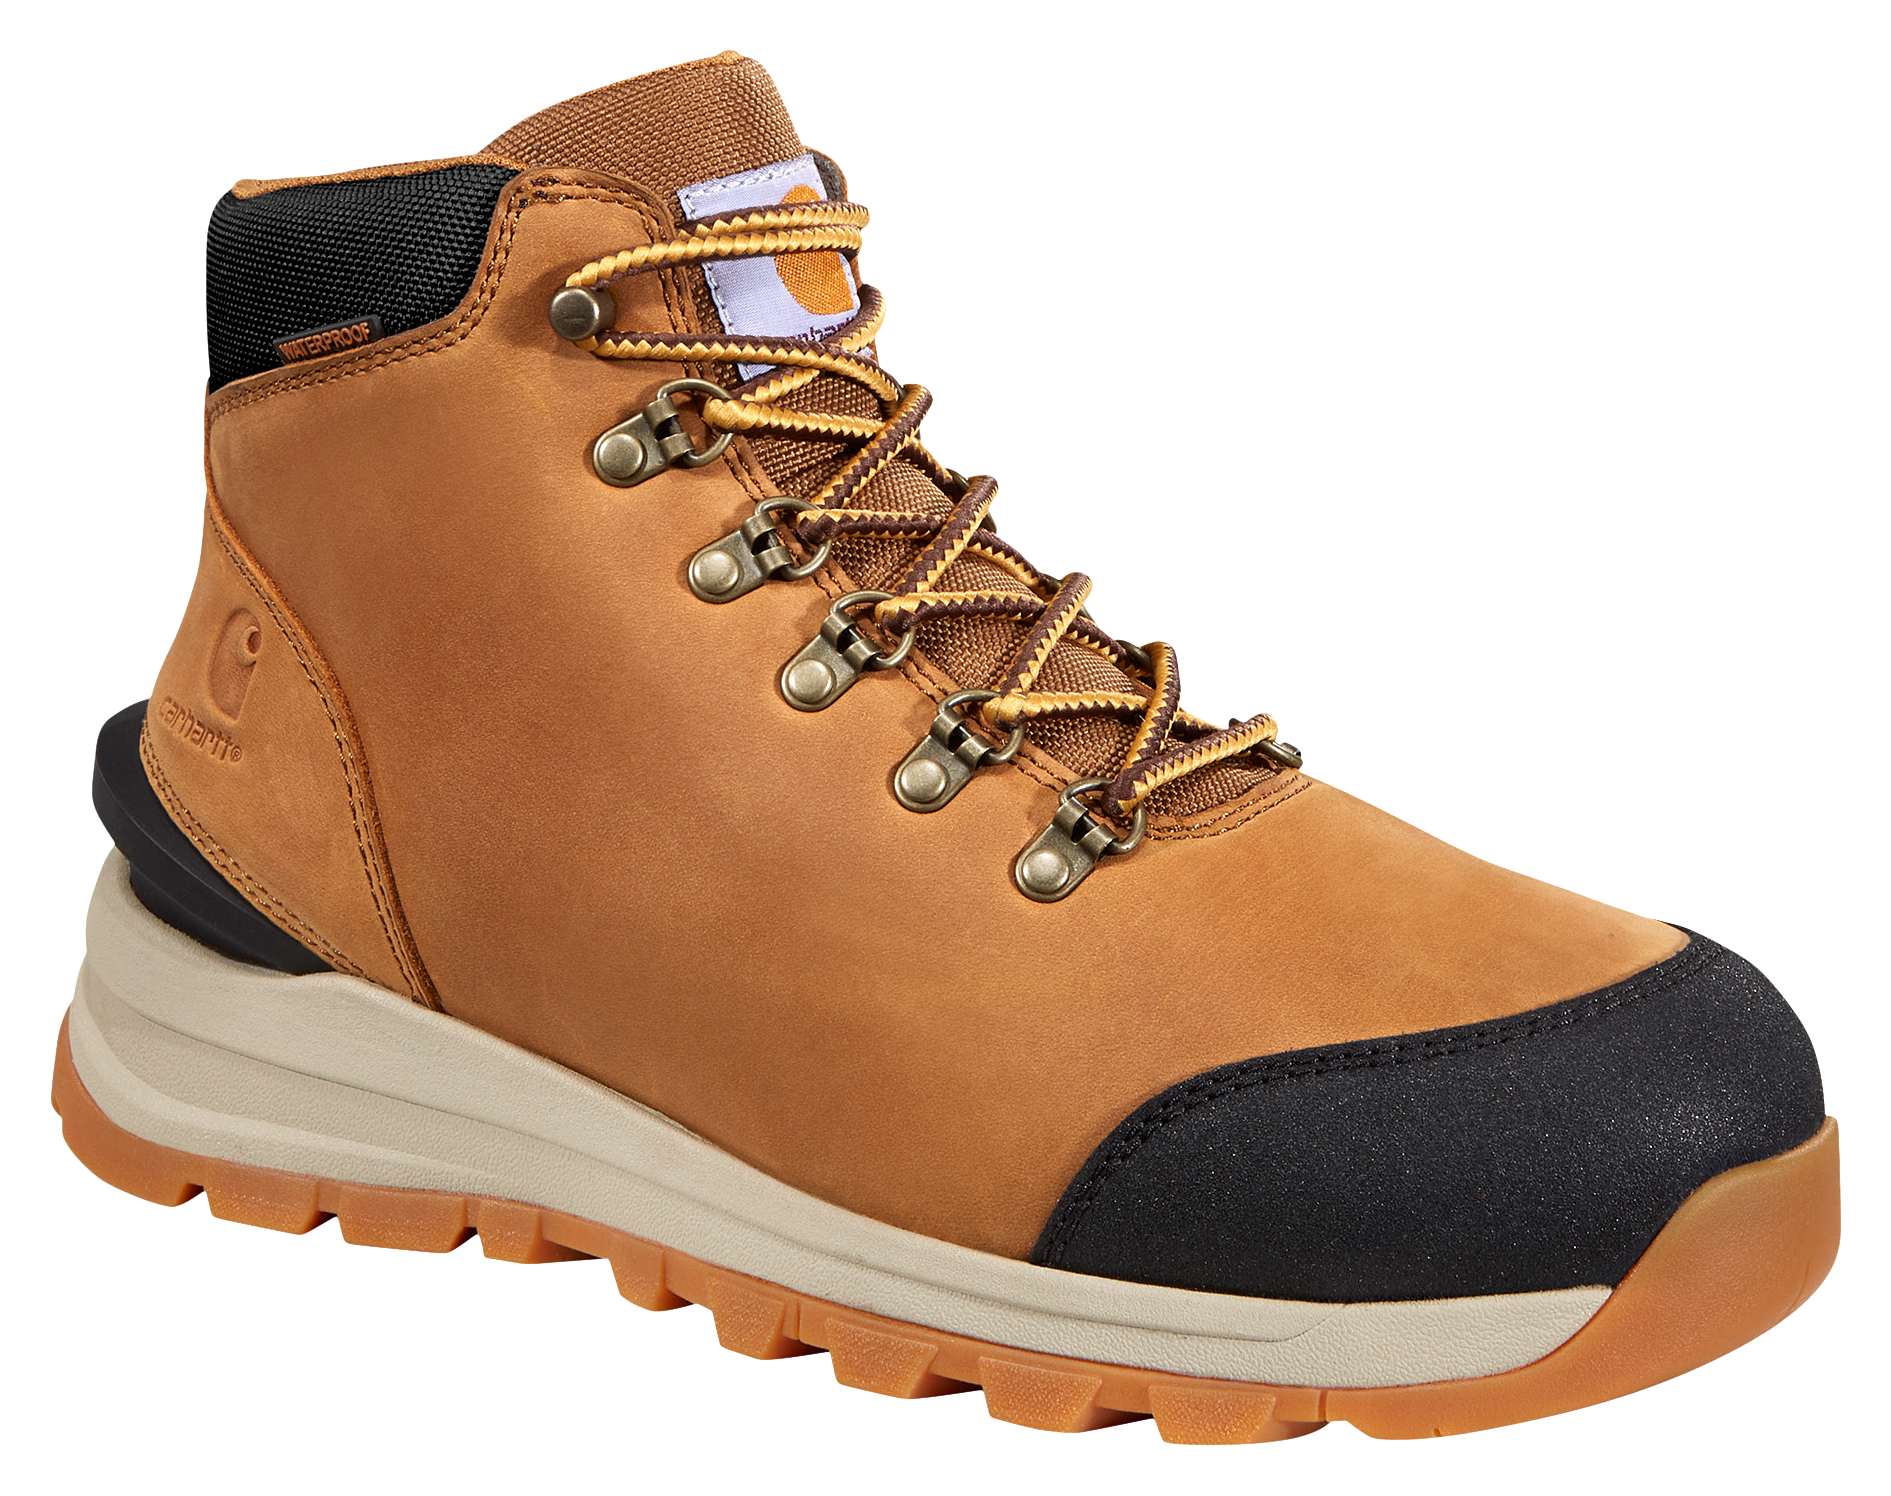 Carhartt Gilmore Waterproof Hiking Boots for Men - Brown - 8W